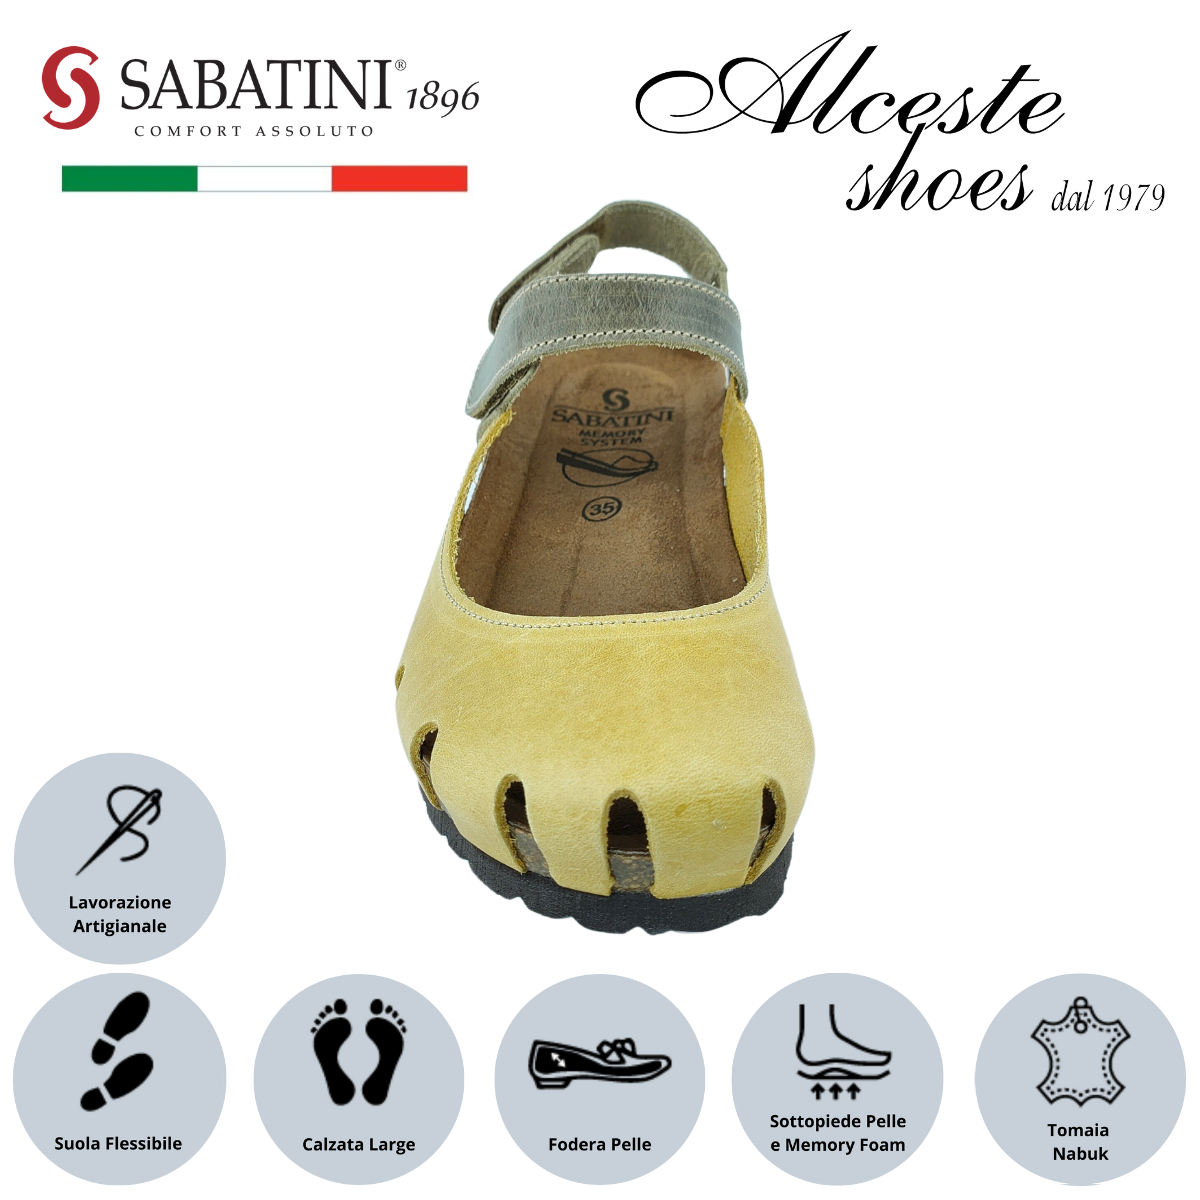 Sandalo Donna con Punta Chiusa "Sabatini" Art. 4009 in Nabuk Giallo Ocra e Testa di Moro Alceste Shoes 32